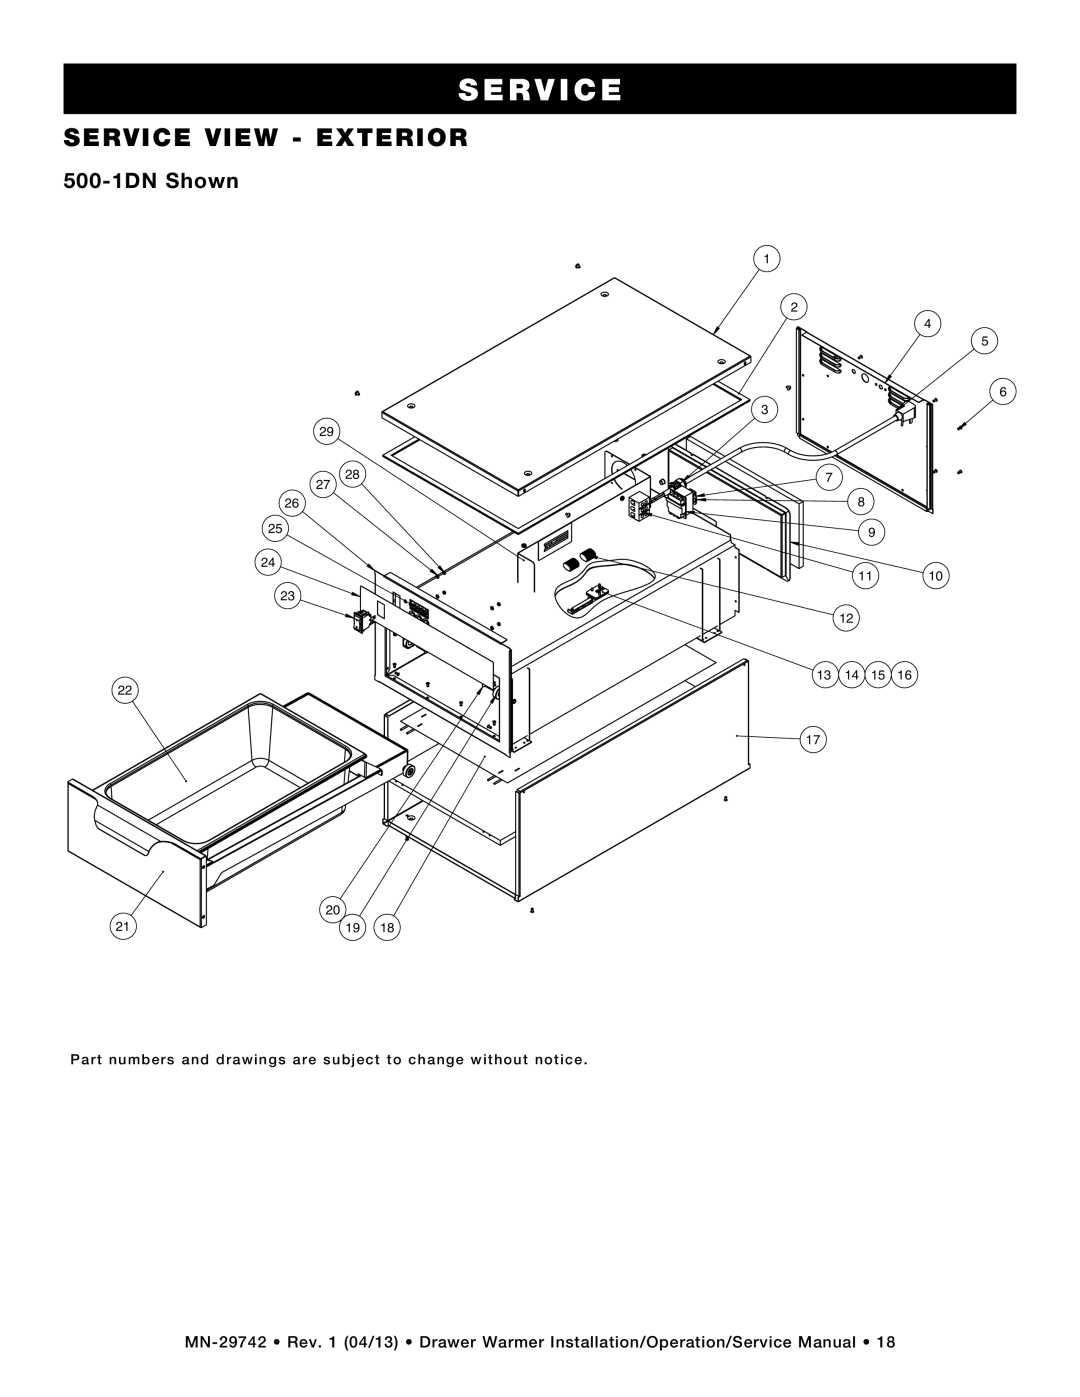 Alto-Shaam drawer warmers, 500-3D, 3DN, 2DN, 500-2D manual service view - EXTERIOR, 500-1DN Shown, S Erv Ice 